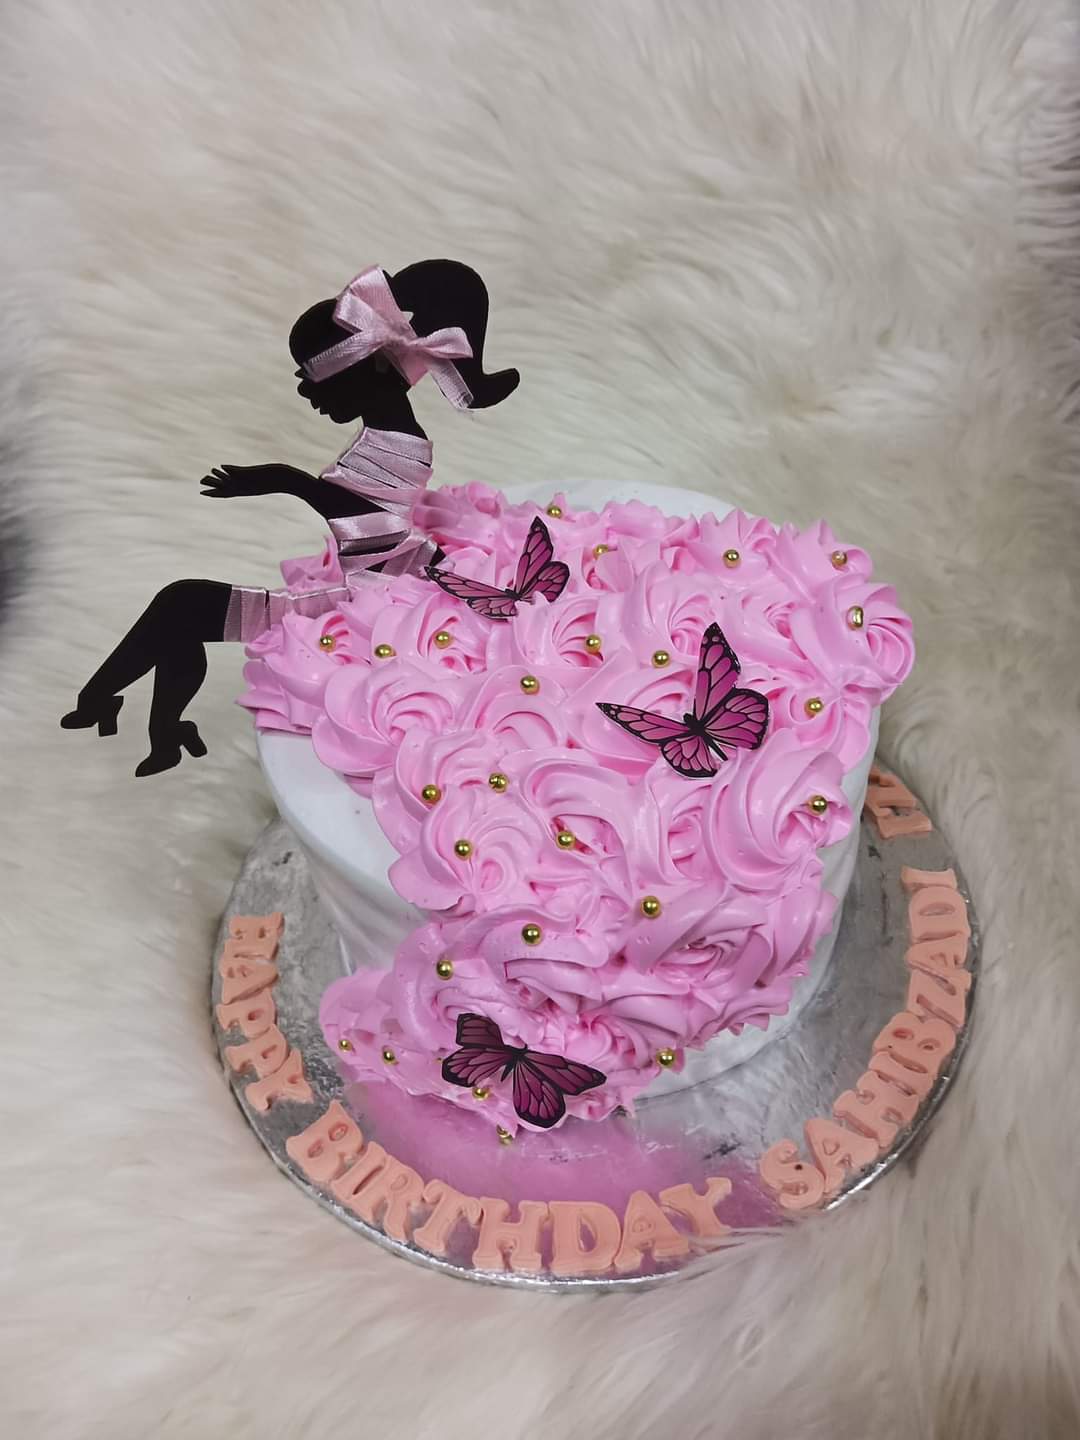 Customized girly theme full cream cake